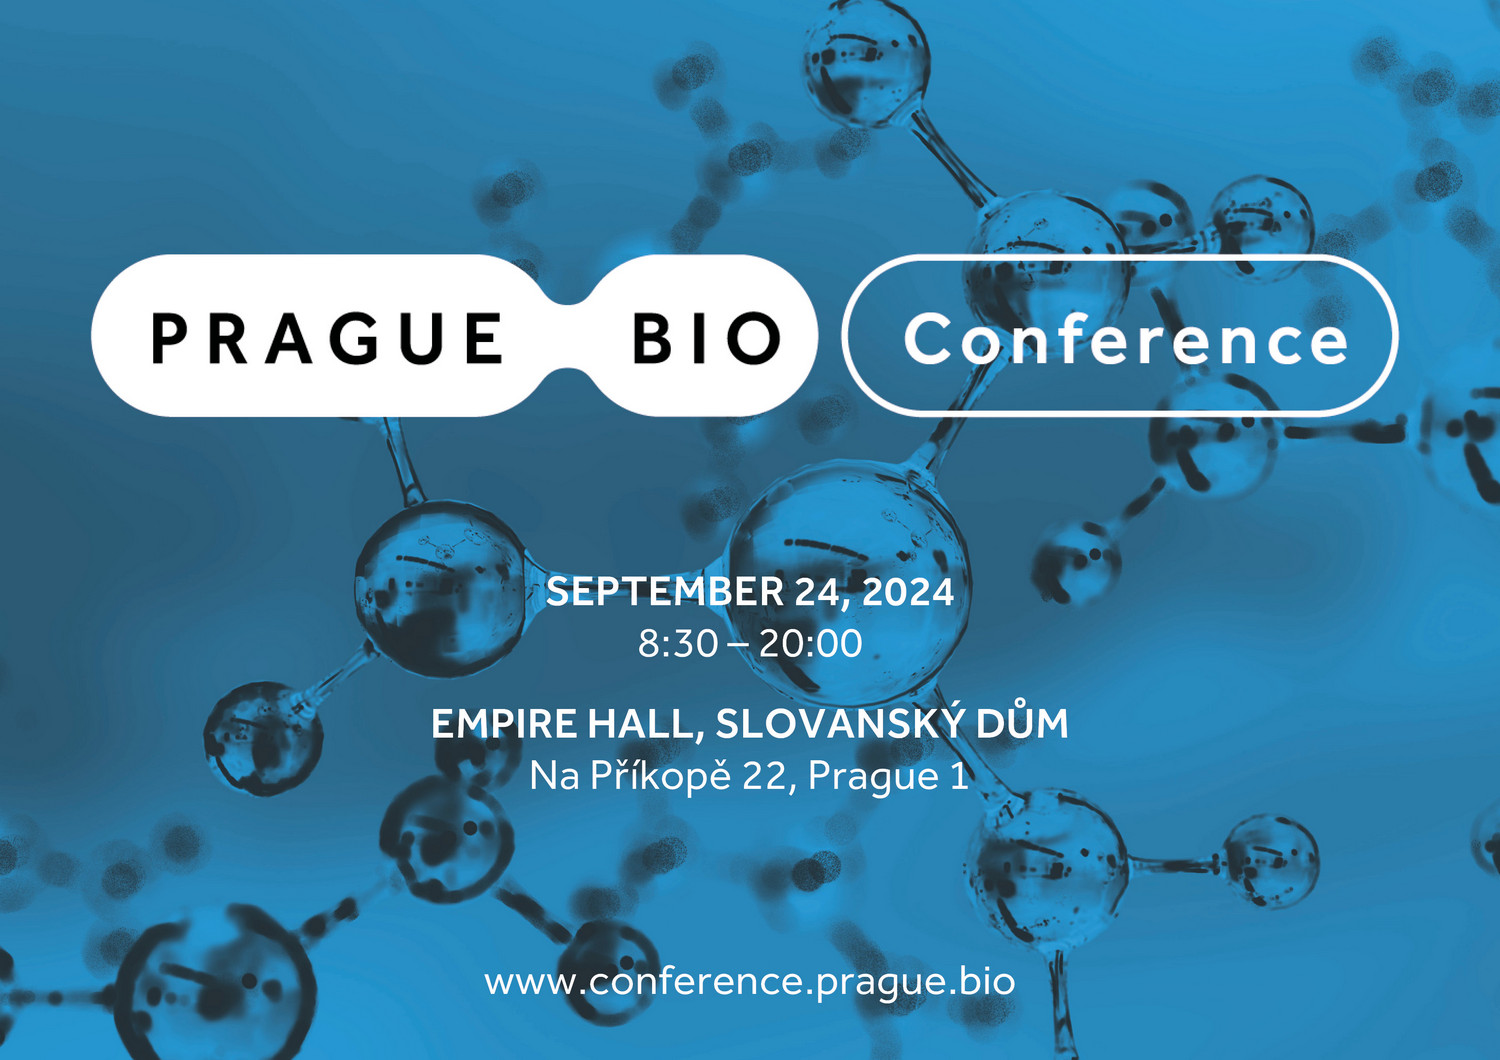 Prague.bio Conference 2024